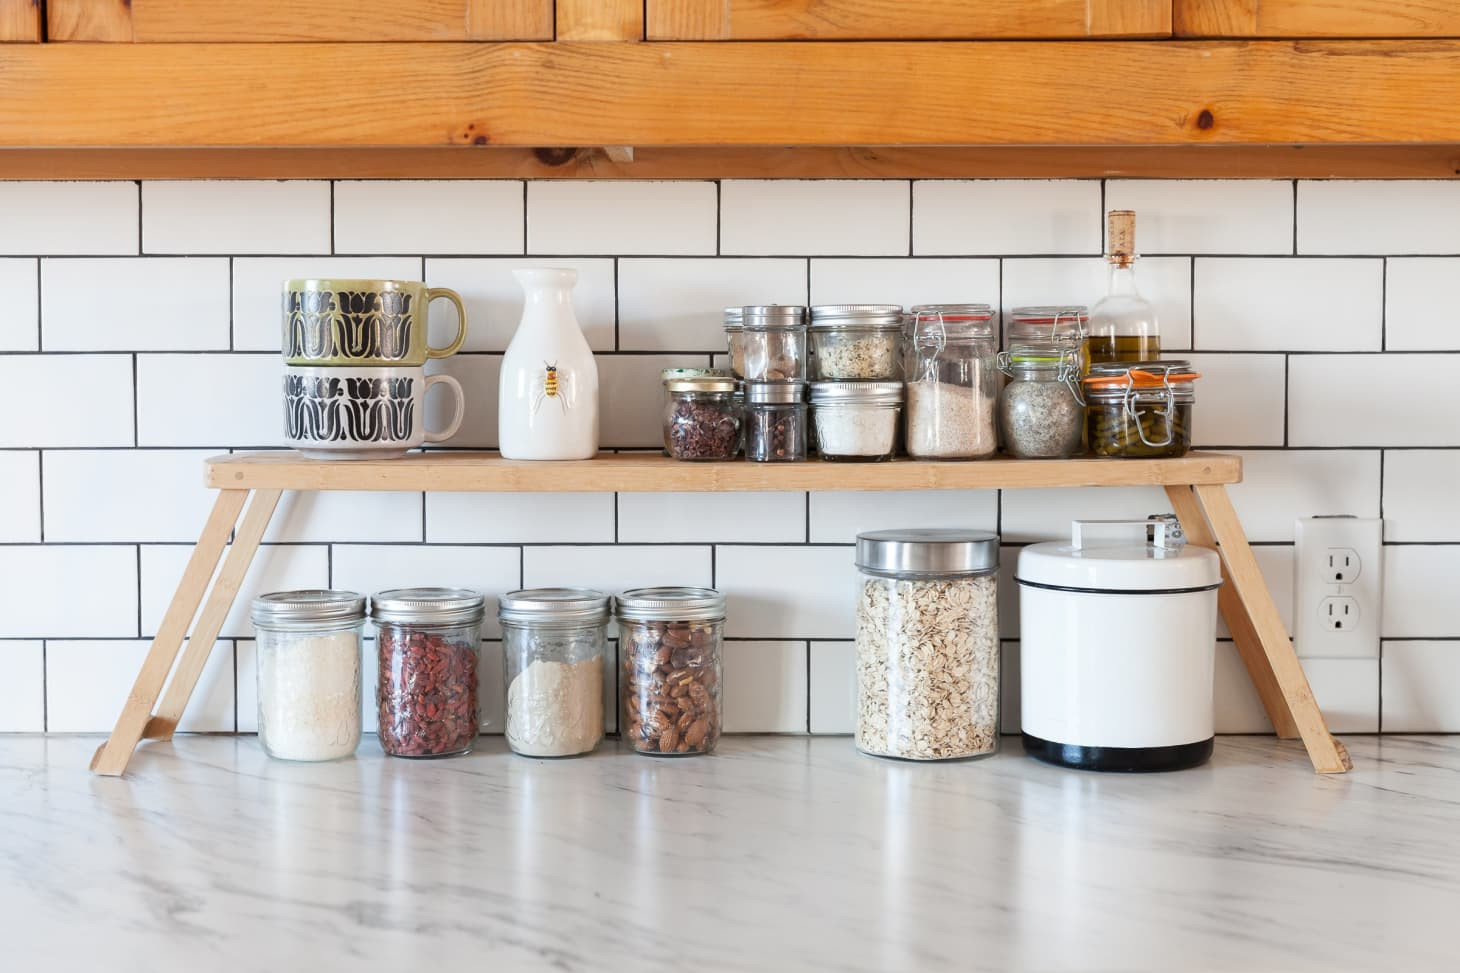 Kitchen Countertop Storage Ideas
 The 21 Best Storage Ideas for Small Kitchens